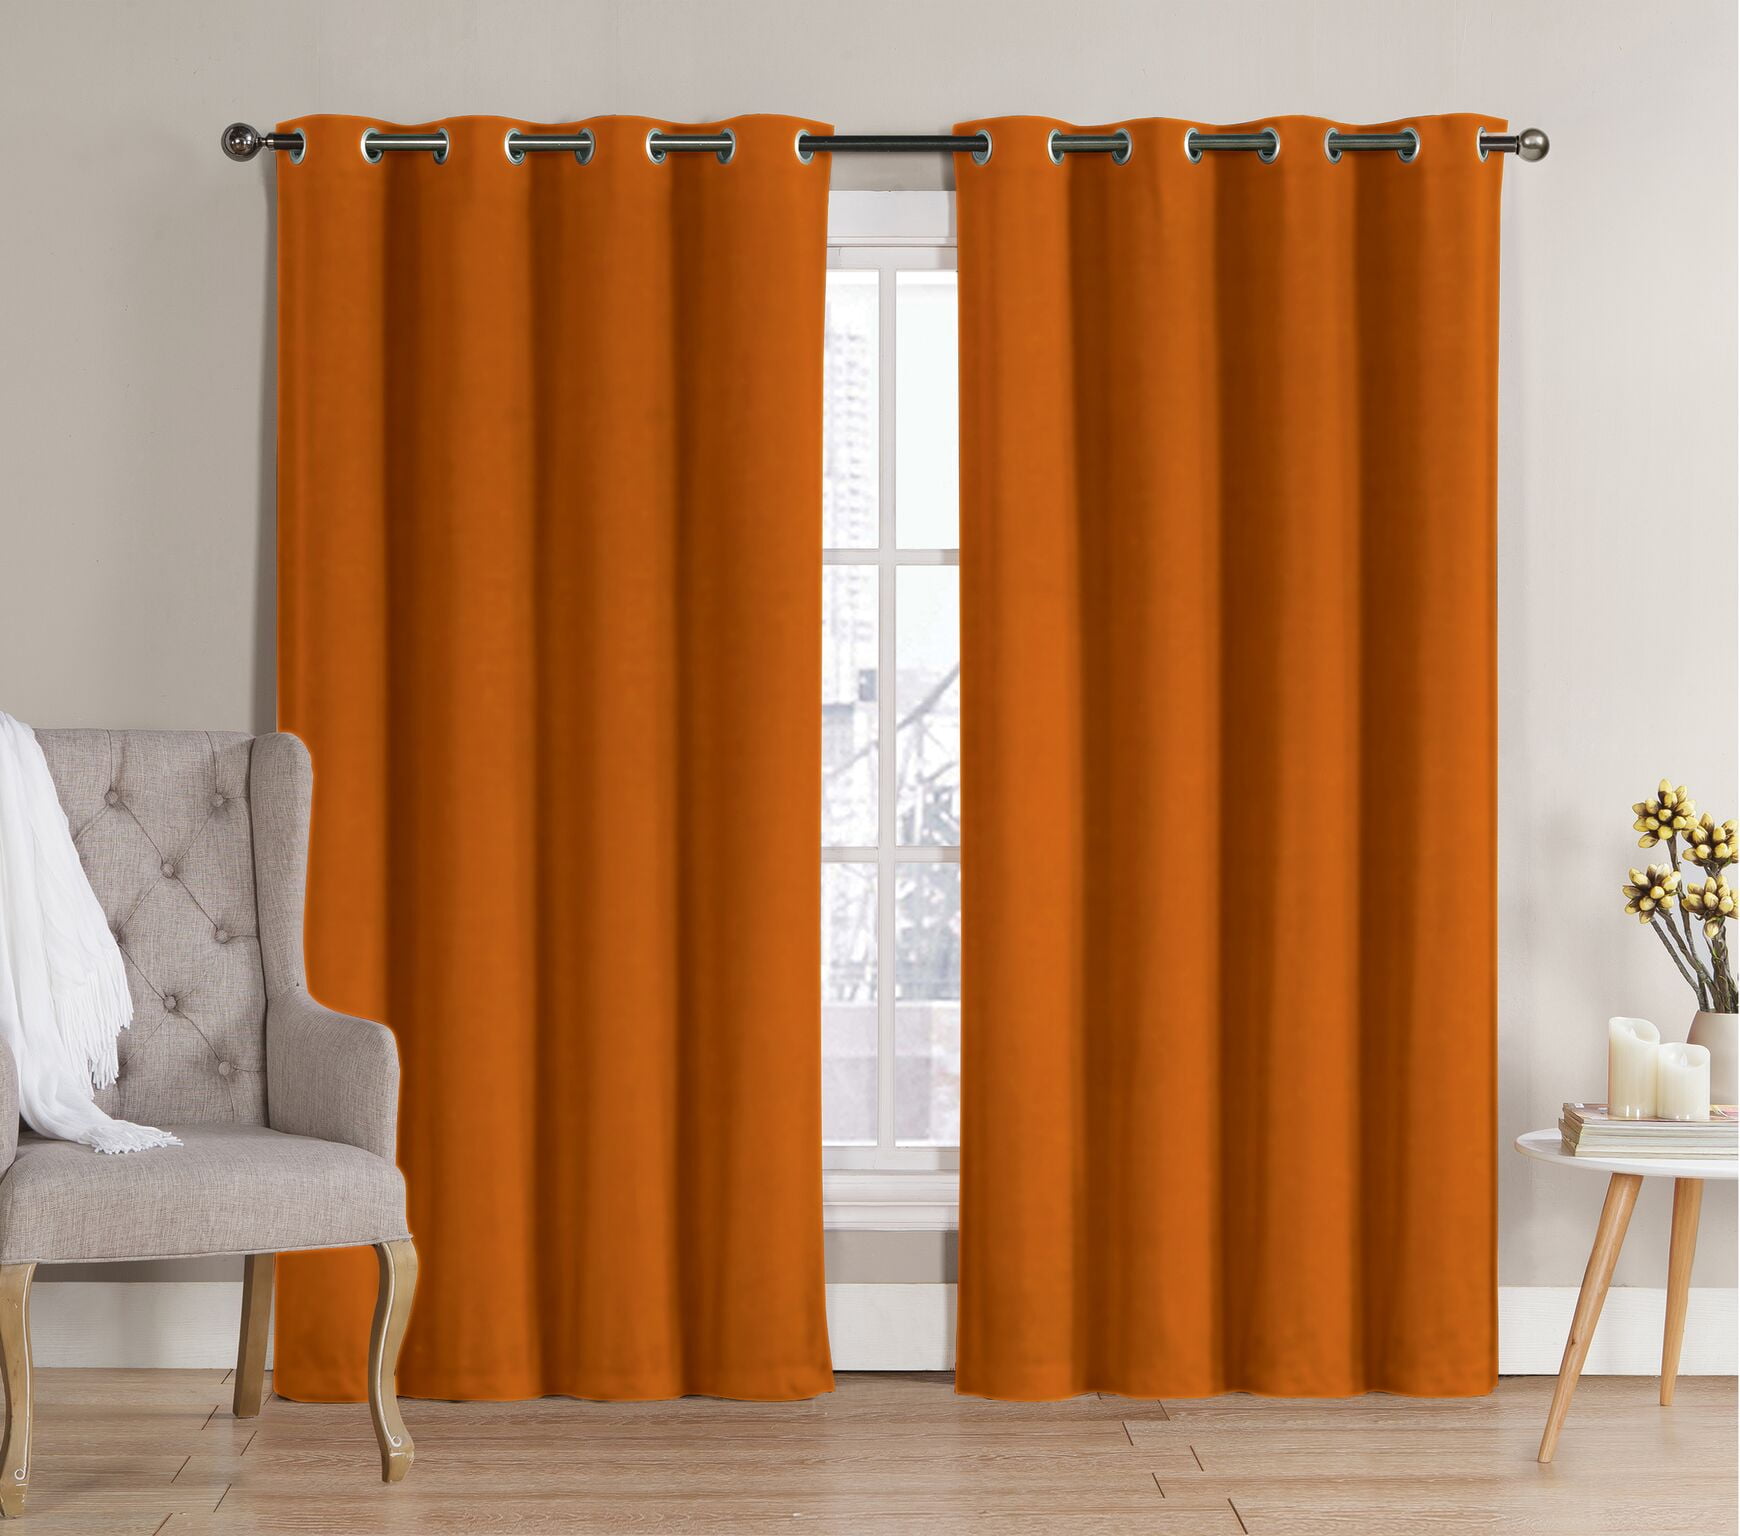 2 Pack: Hotel Thermal Grommet Curtains 84 Orange, in. Blackout 100% Length 